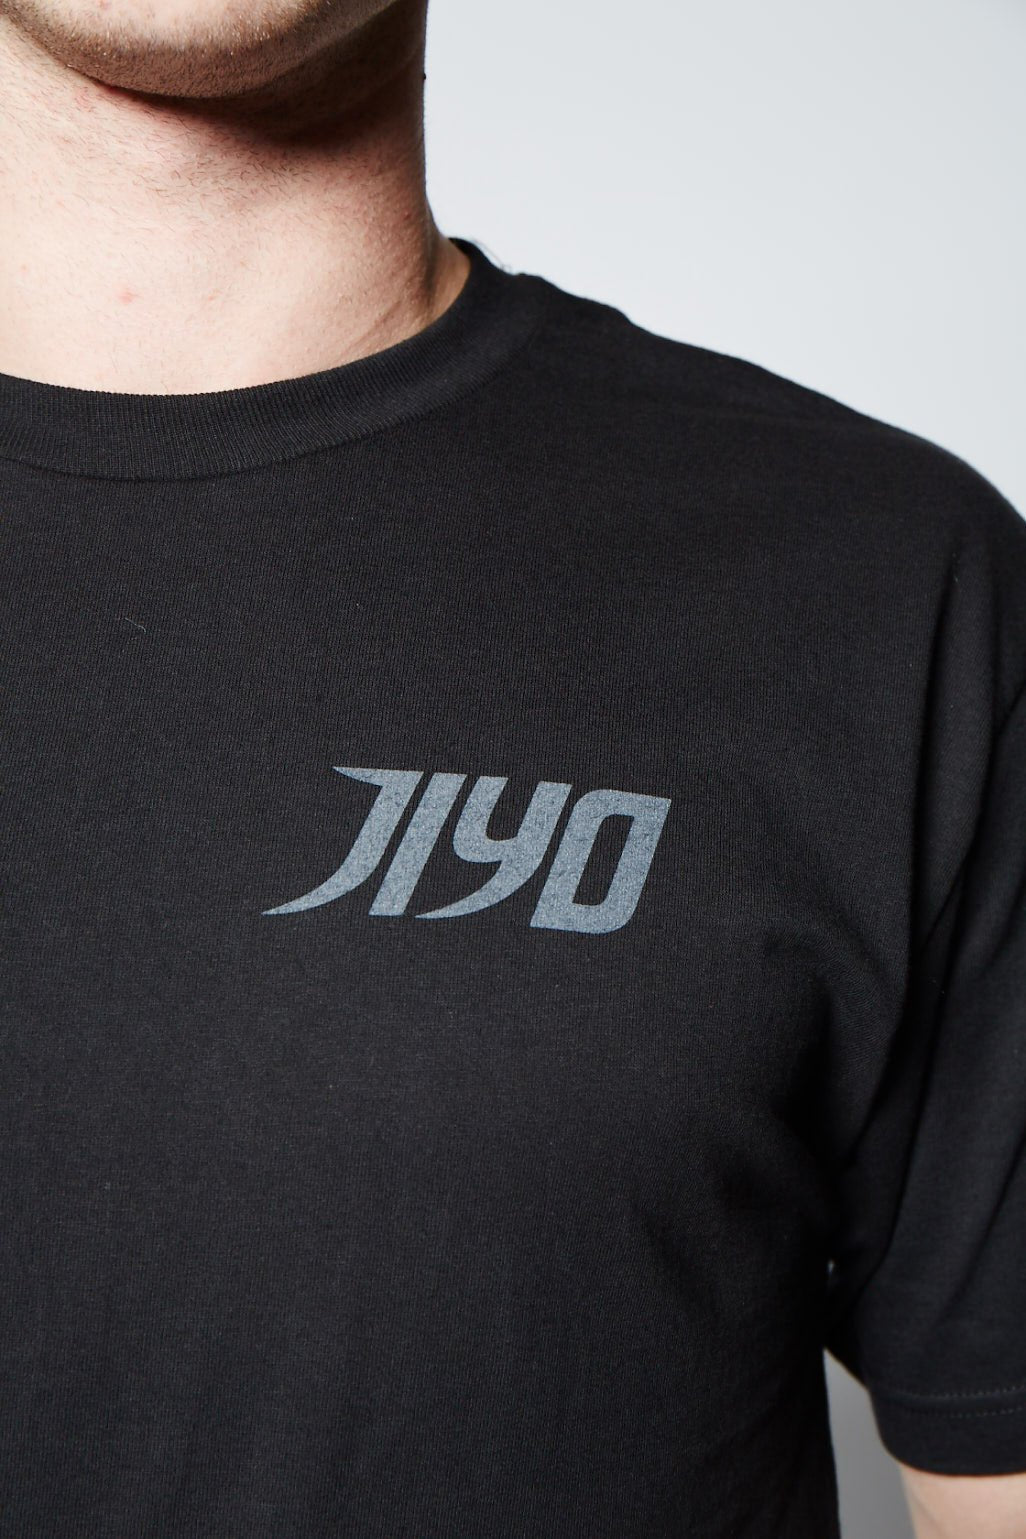 MOZAIC JIYO TEE, BLACK - Shirts - JIYO WEAR